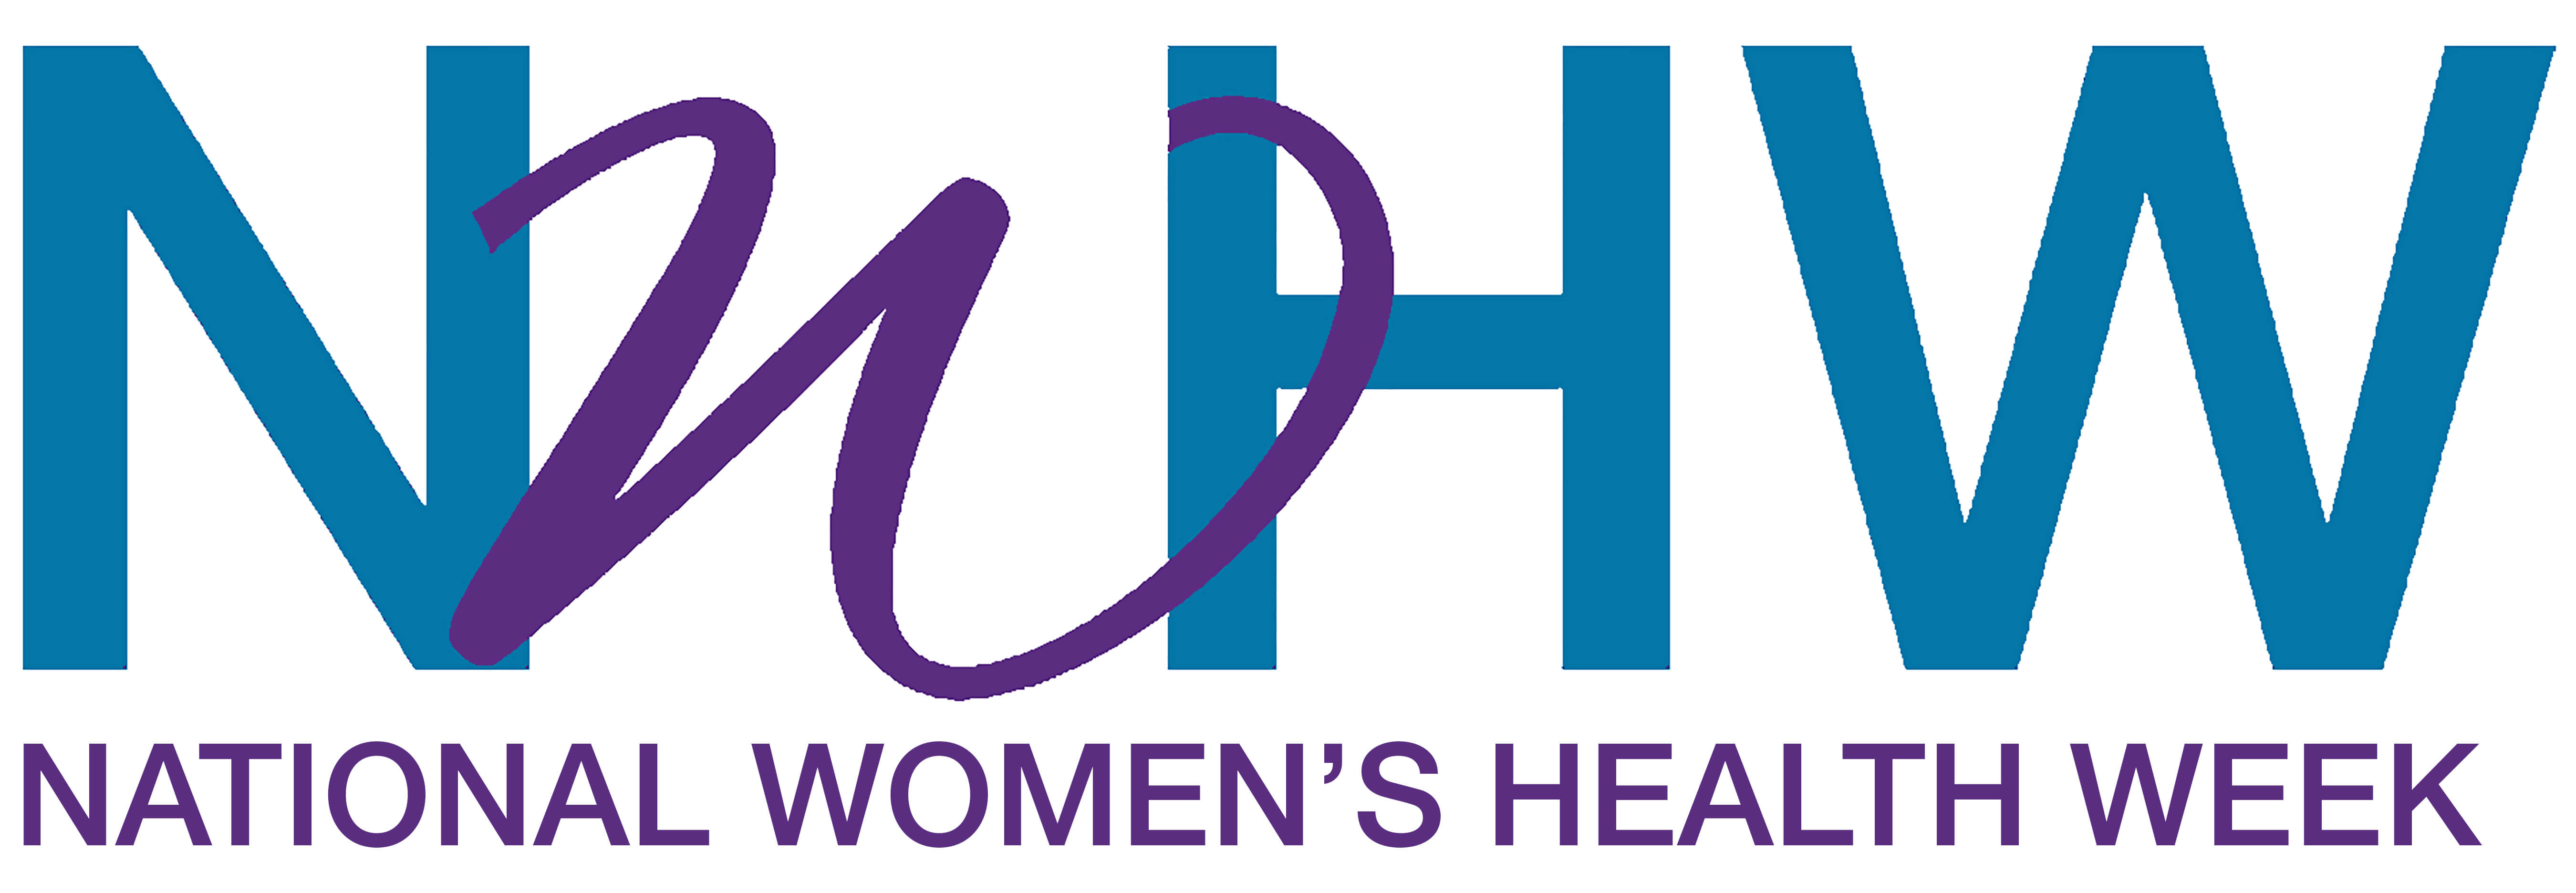 National Women's Health Week Logo